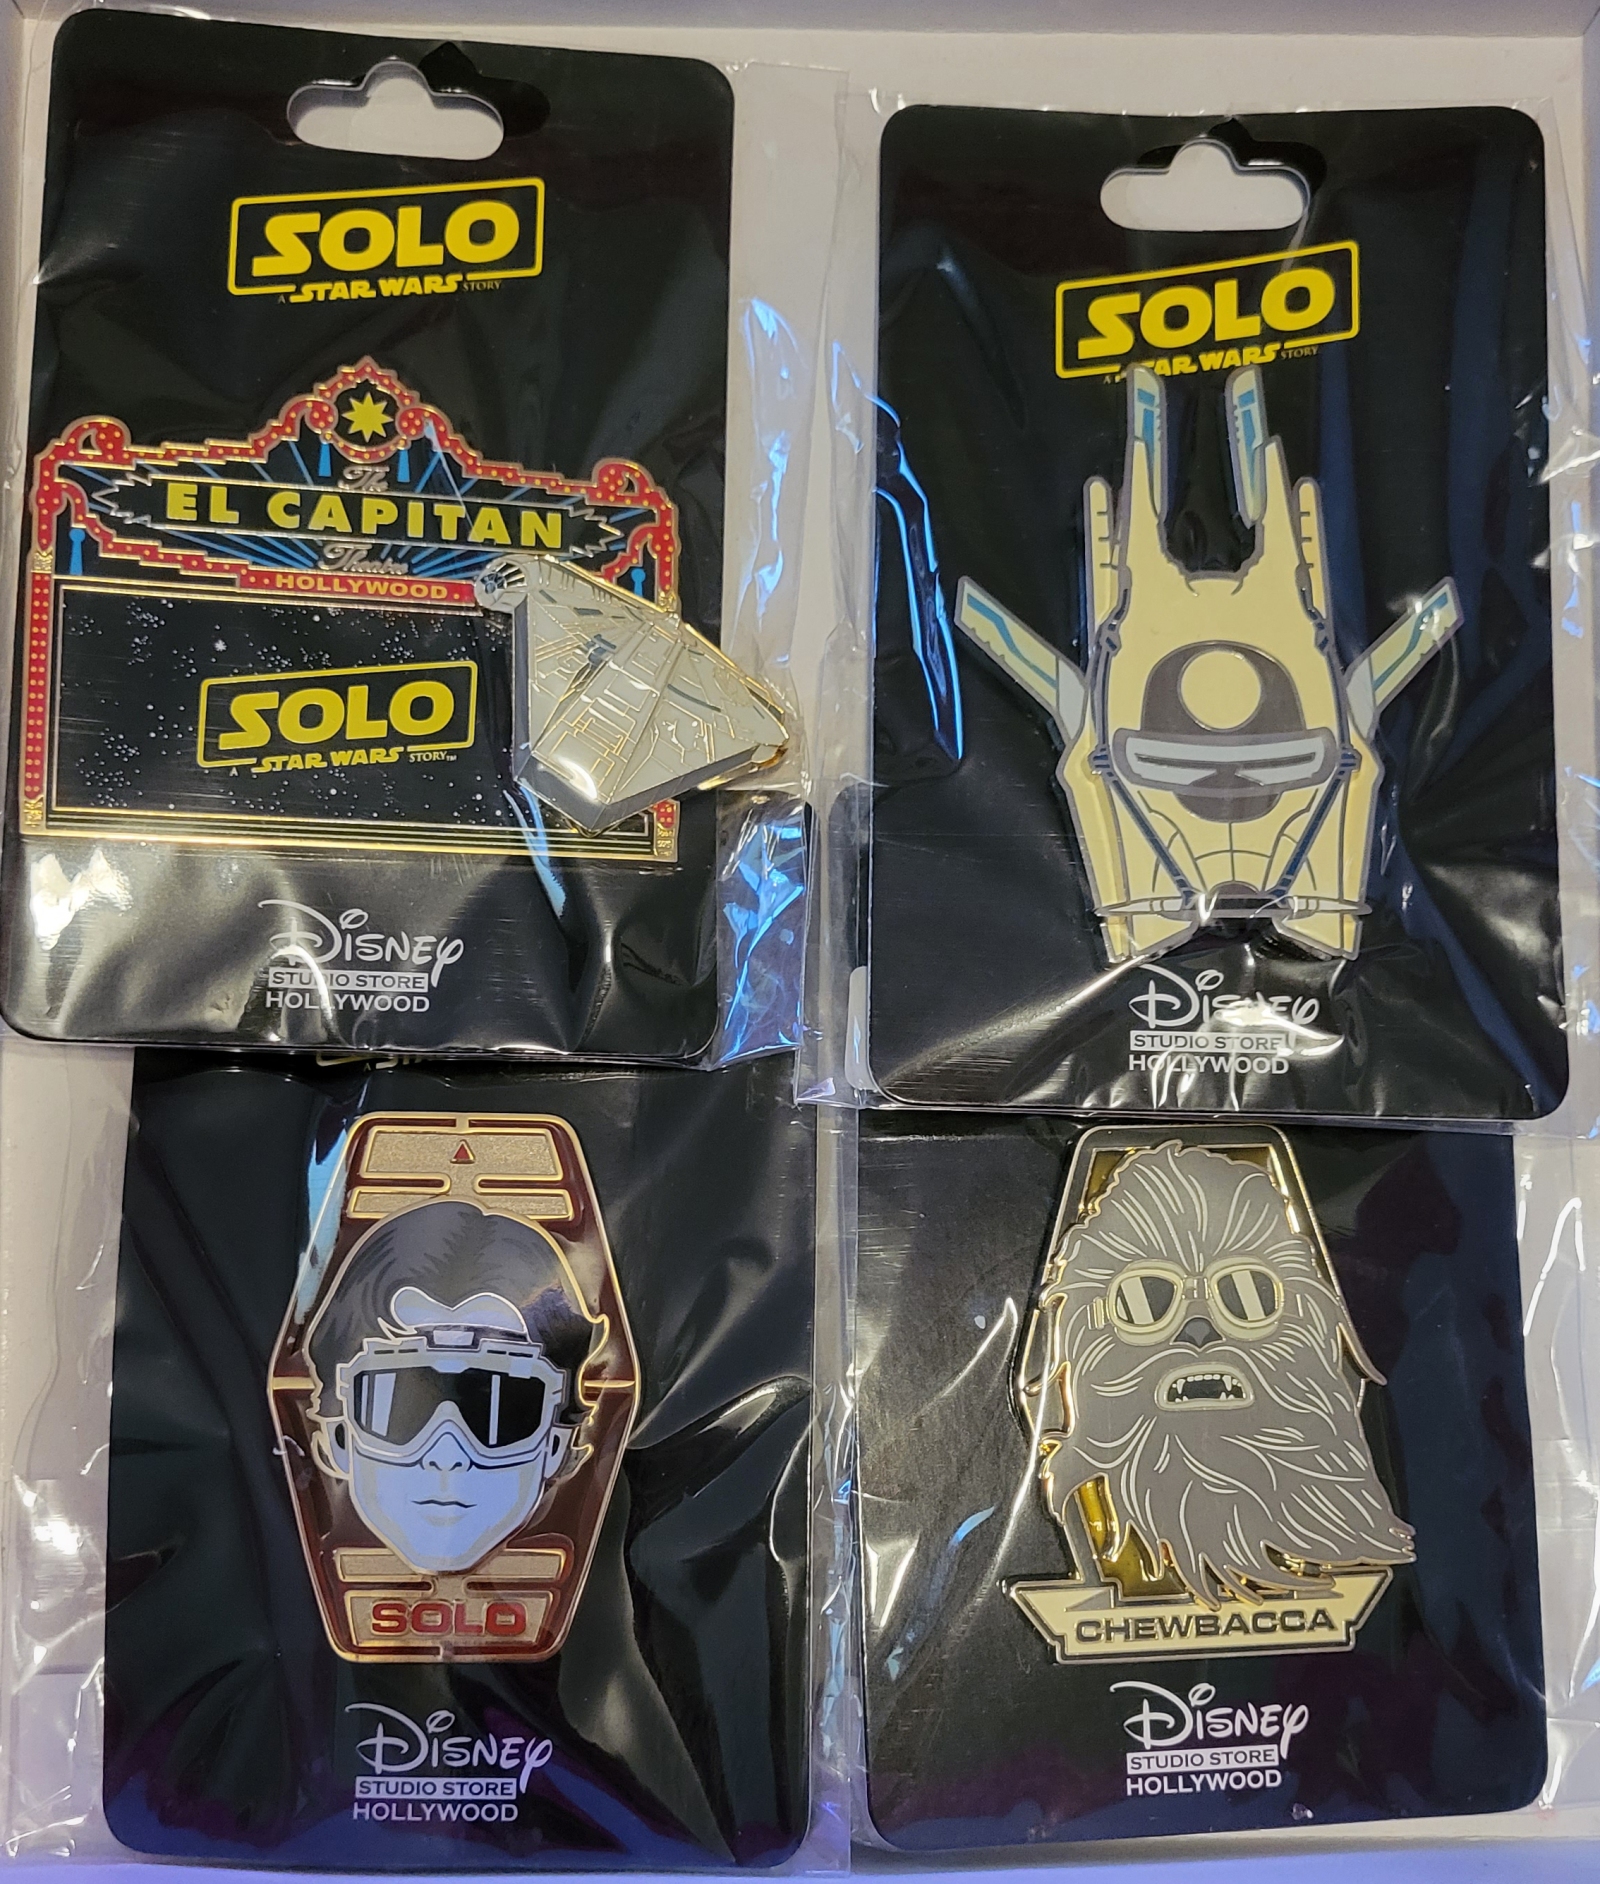 Disney Studio Store Hollywood Solo a Star Wars Story Jumbo Pins